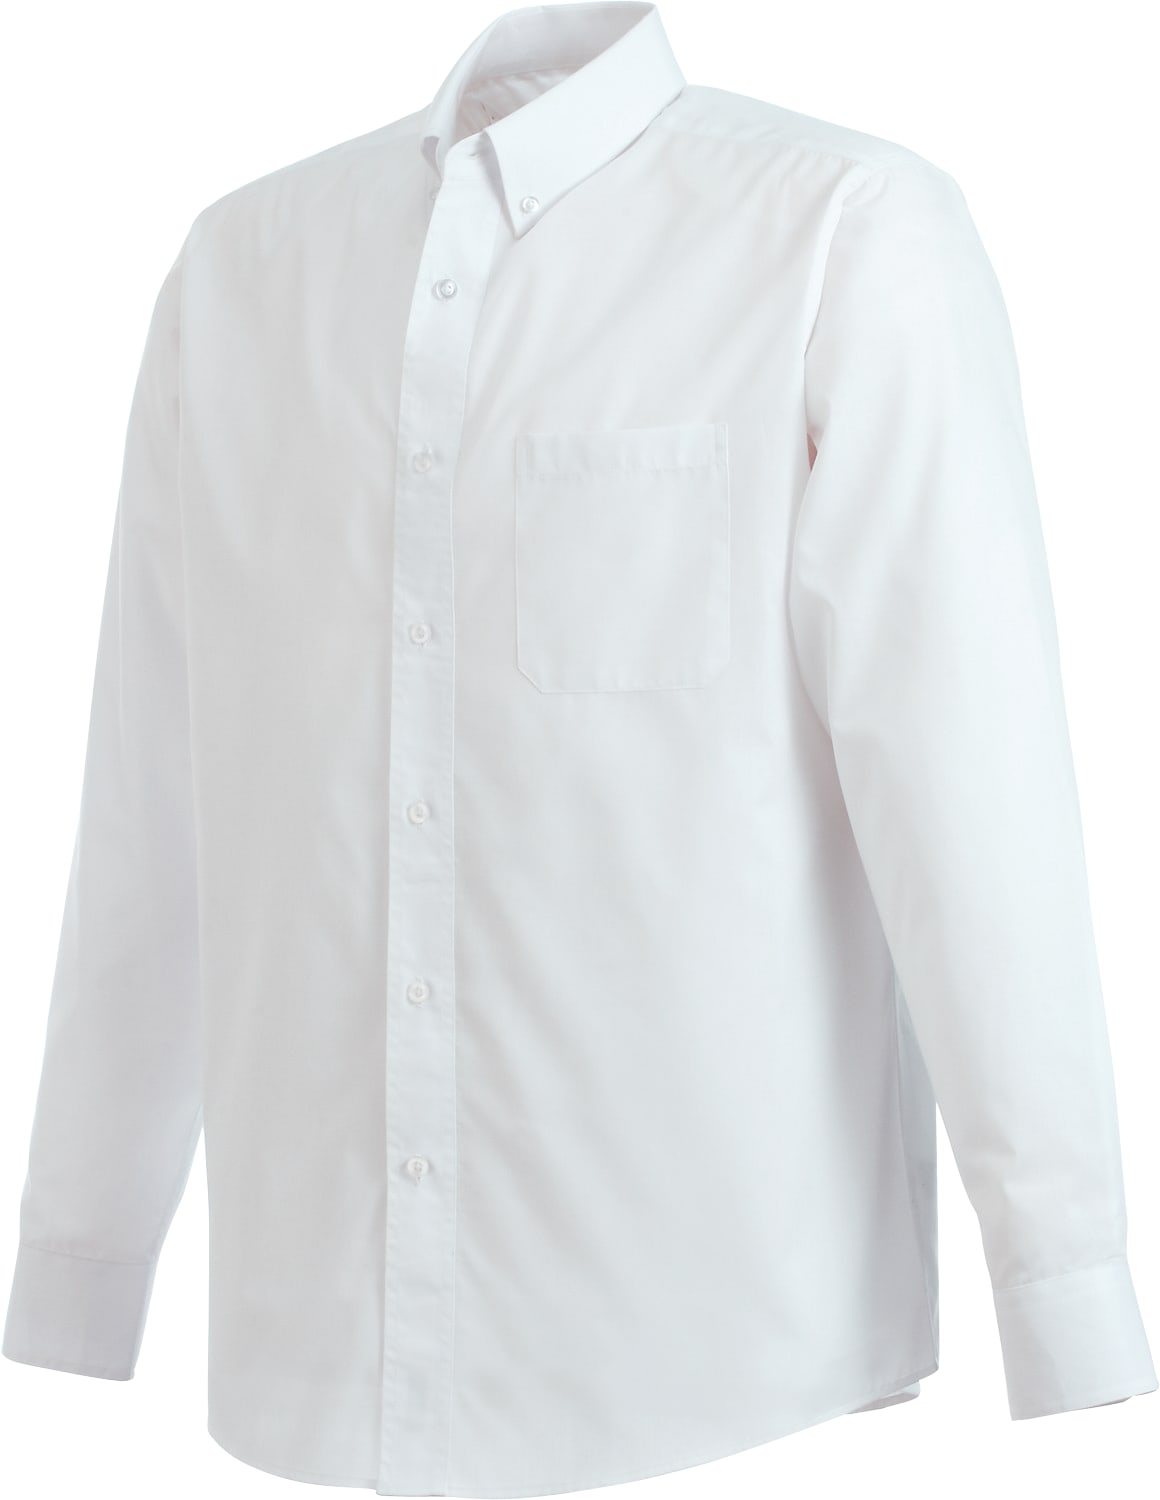 Men's PRESTON Long Sleeve Shirt